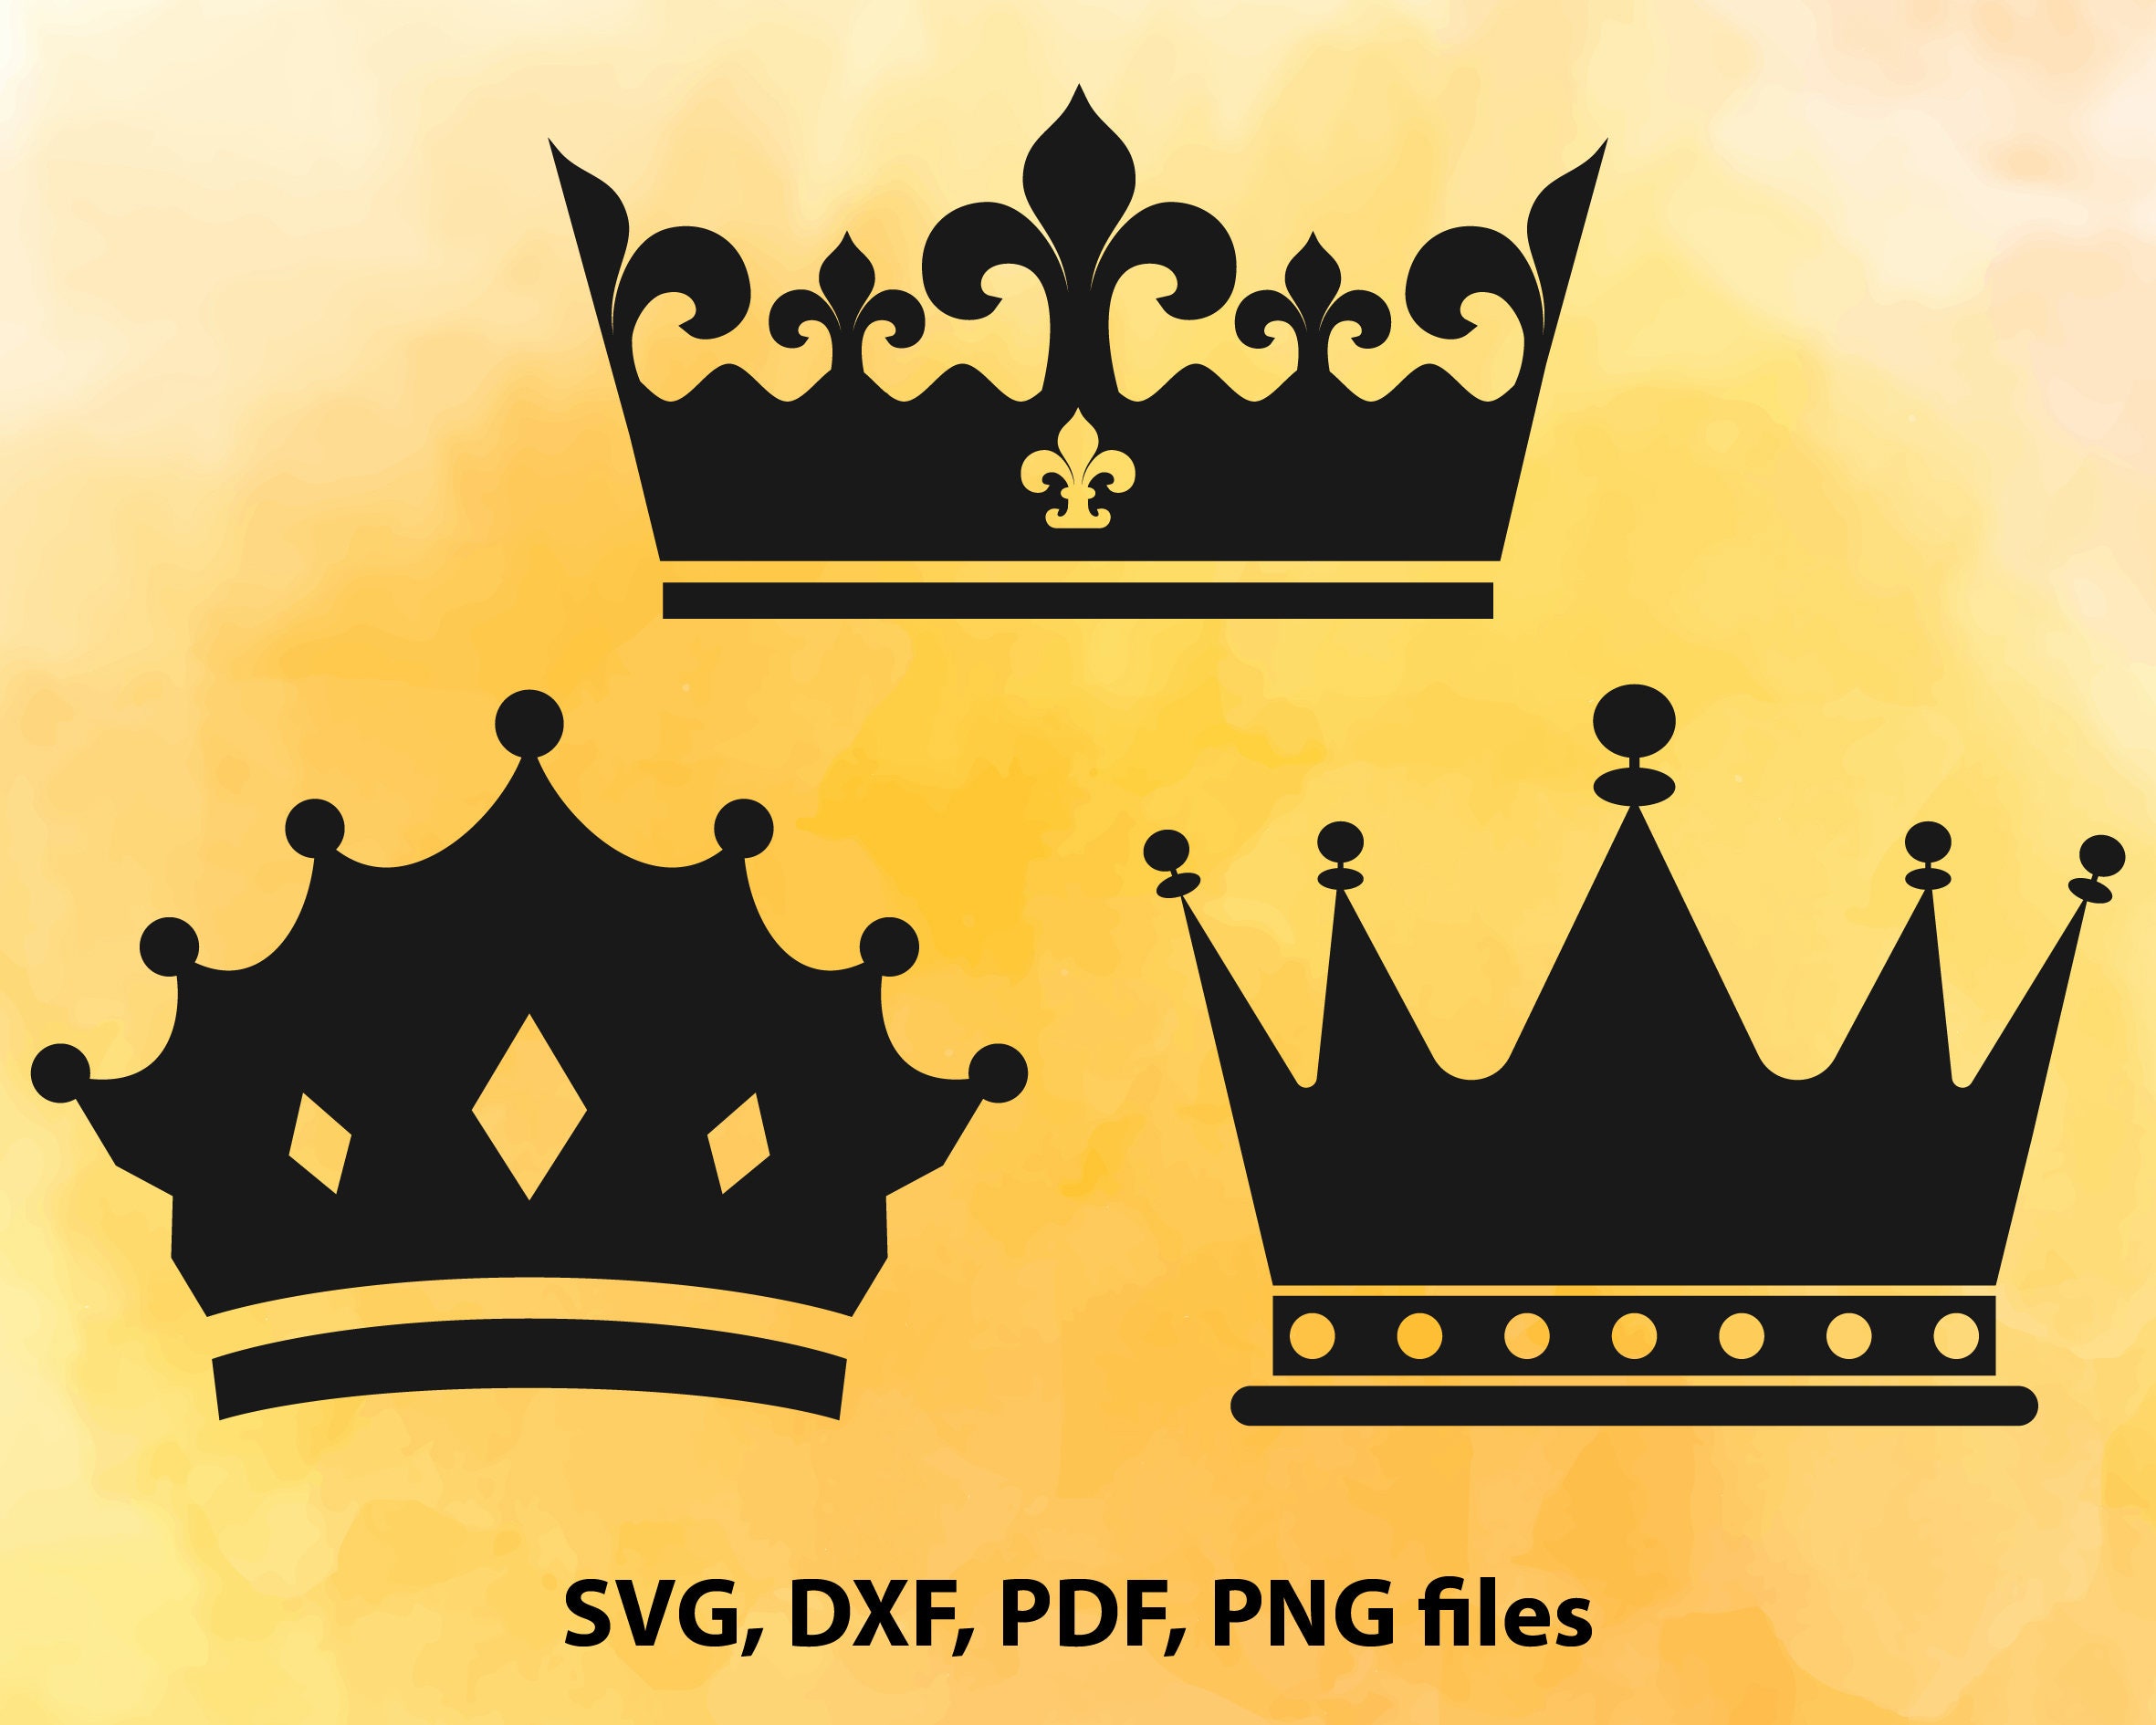 Download Crown SVG file Crown clipart Queen crown King crown Cut